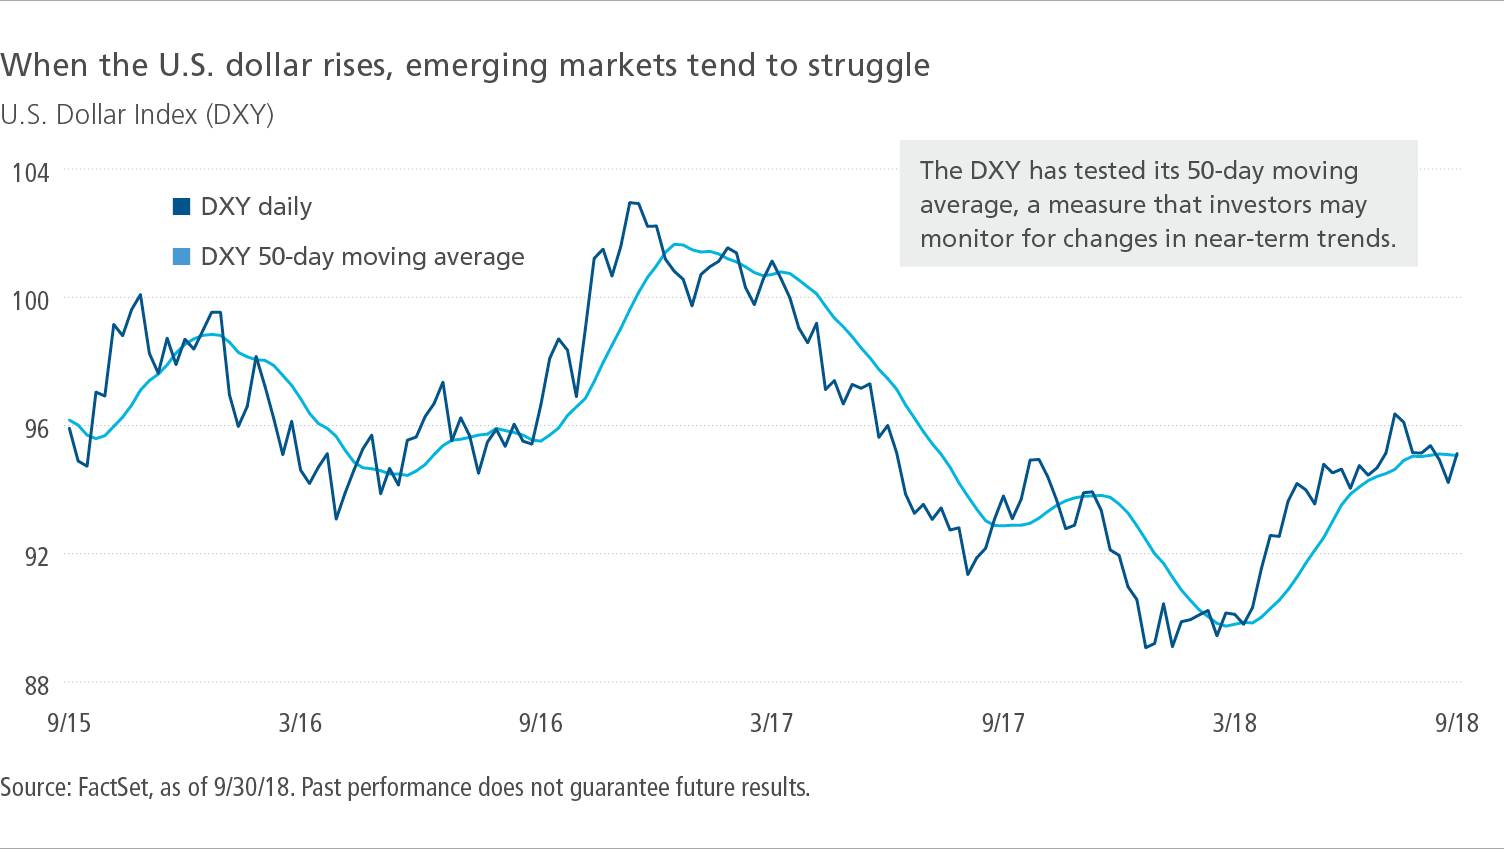 When the U.S. dollar rises, emerging markets struggle